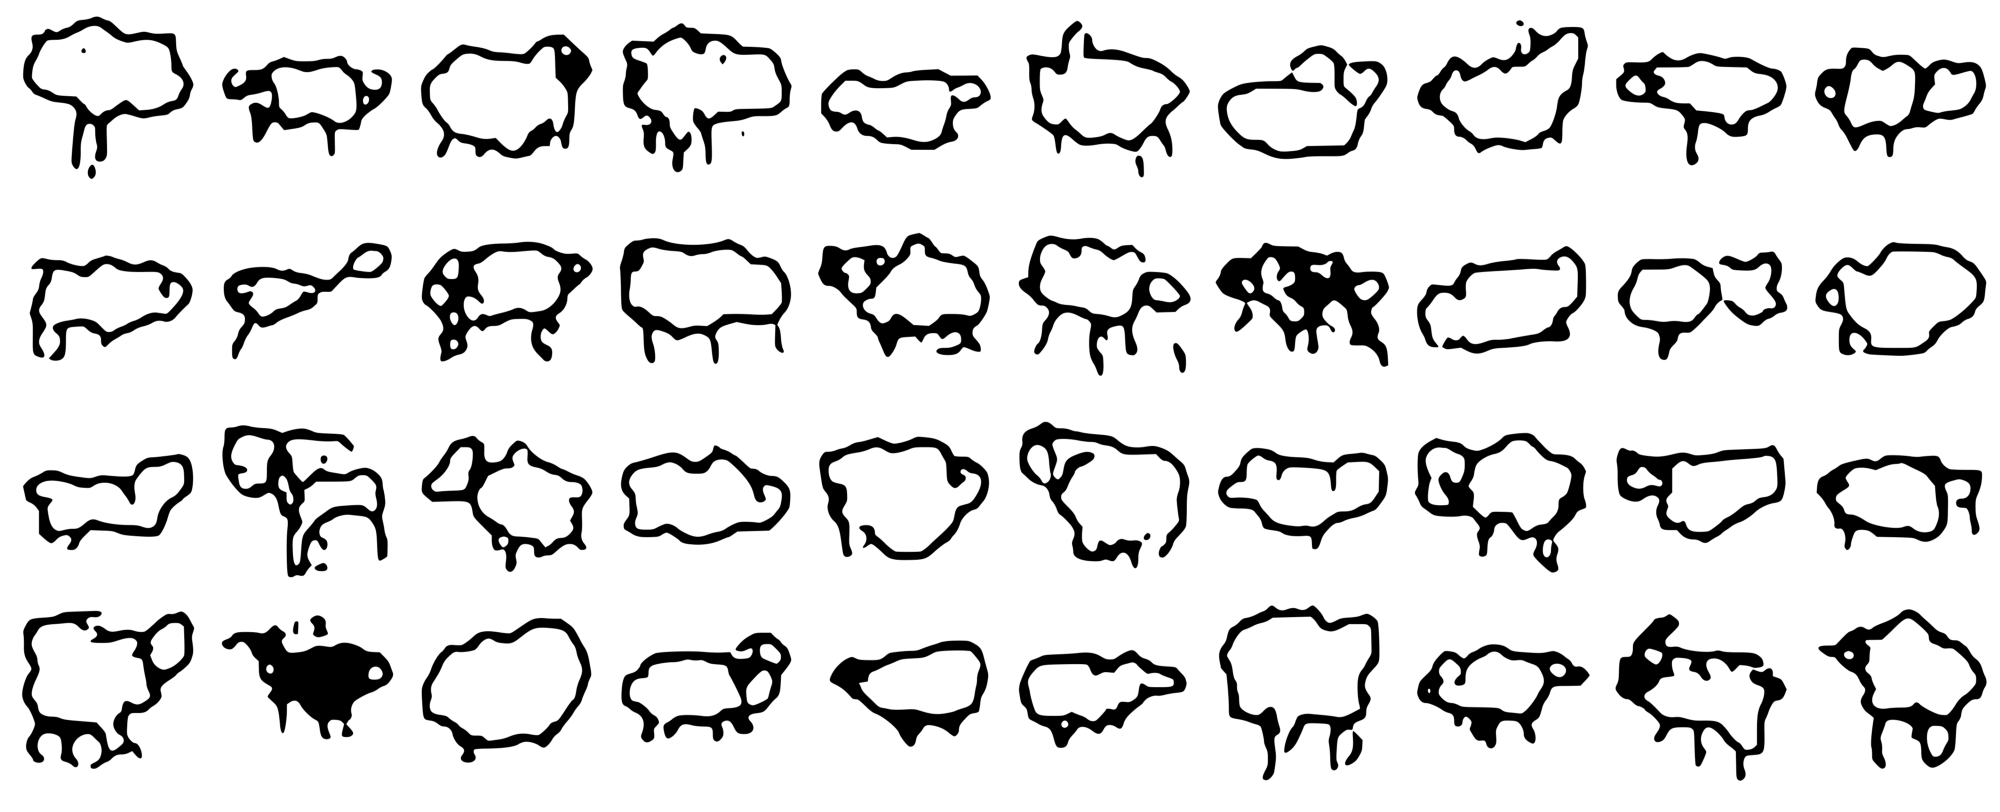 Draw Me an Electric Sheep